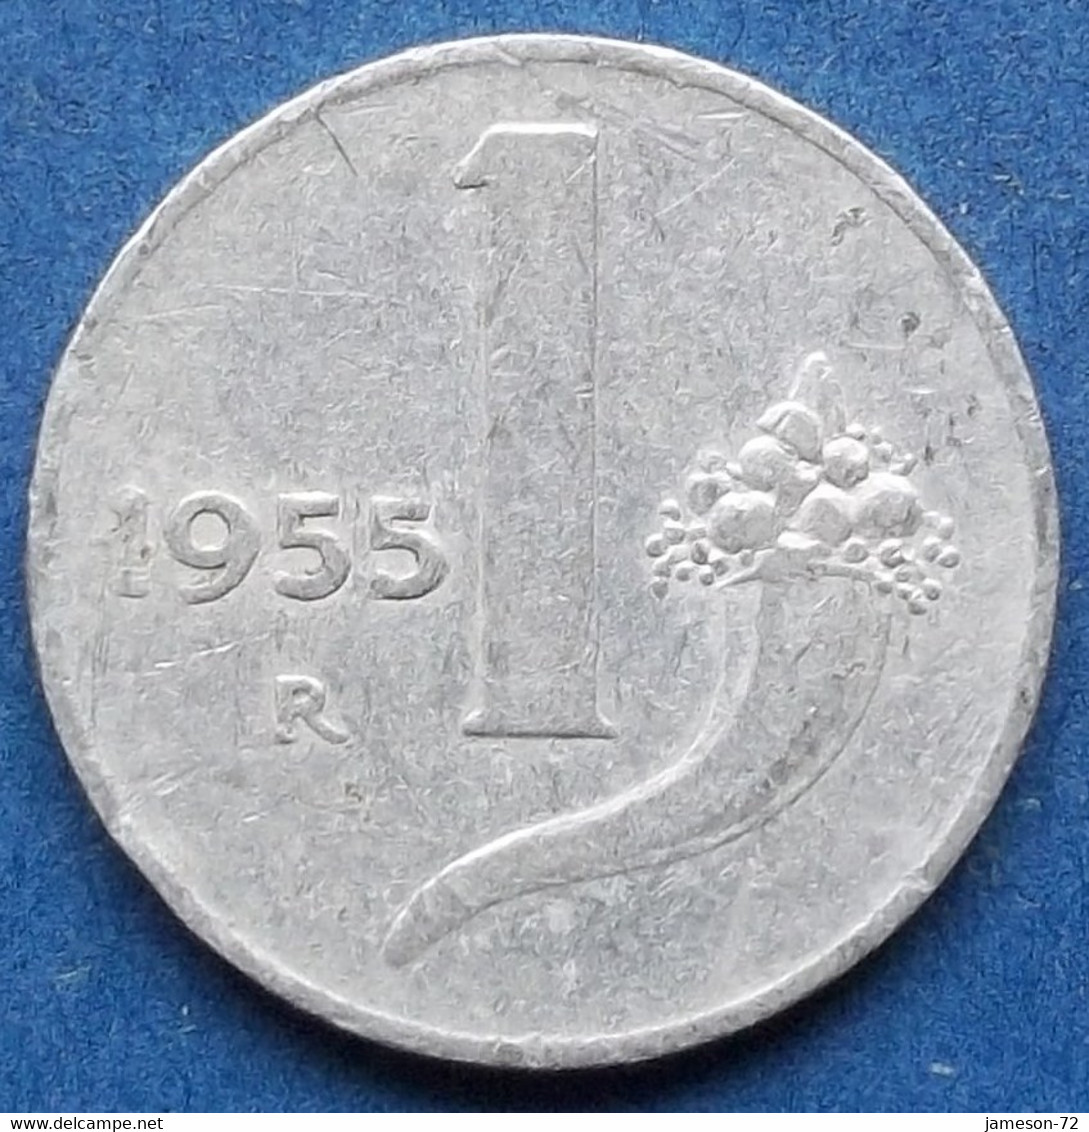 ITALY - 1 Lira 1955 R "balance Scales / Cornucopia" KM# 91 Republic Lira Coinage (1946-2002) - Edelweiss Coins - 1 Lire